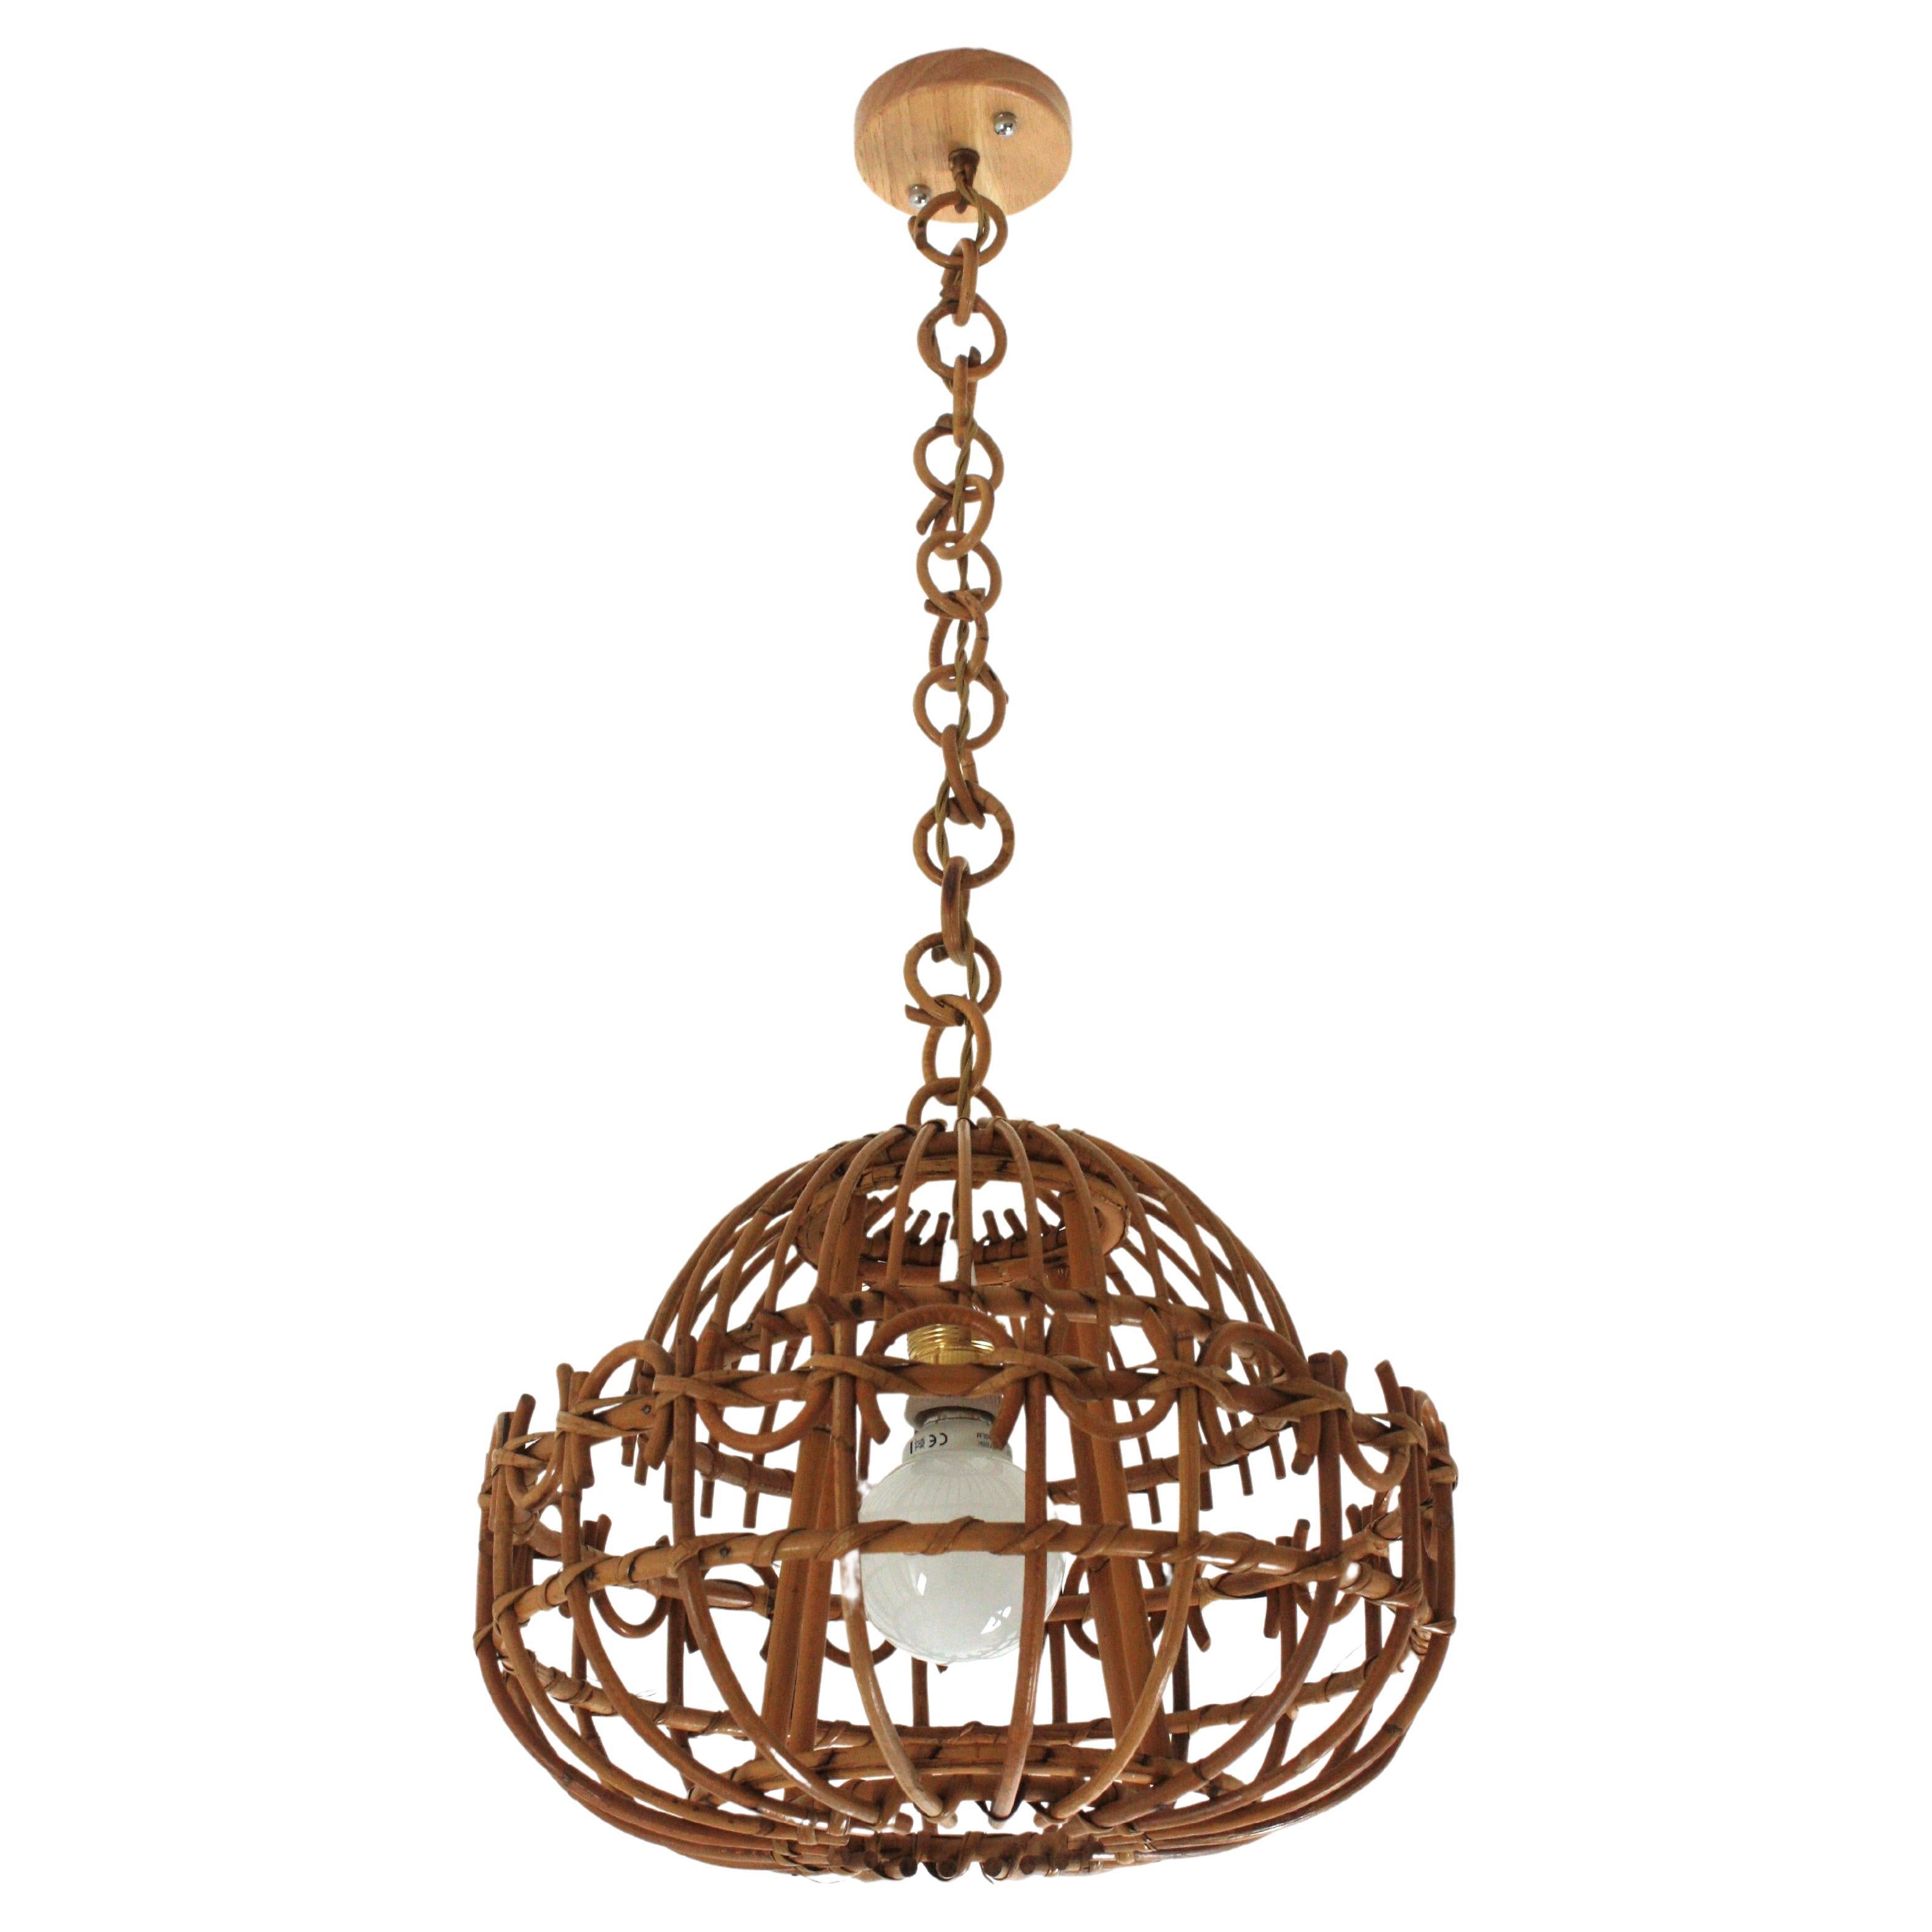 Spanish Rattan Pendant Hanging Light / Lantern For Sale